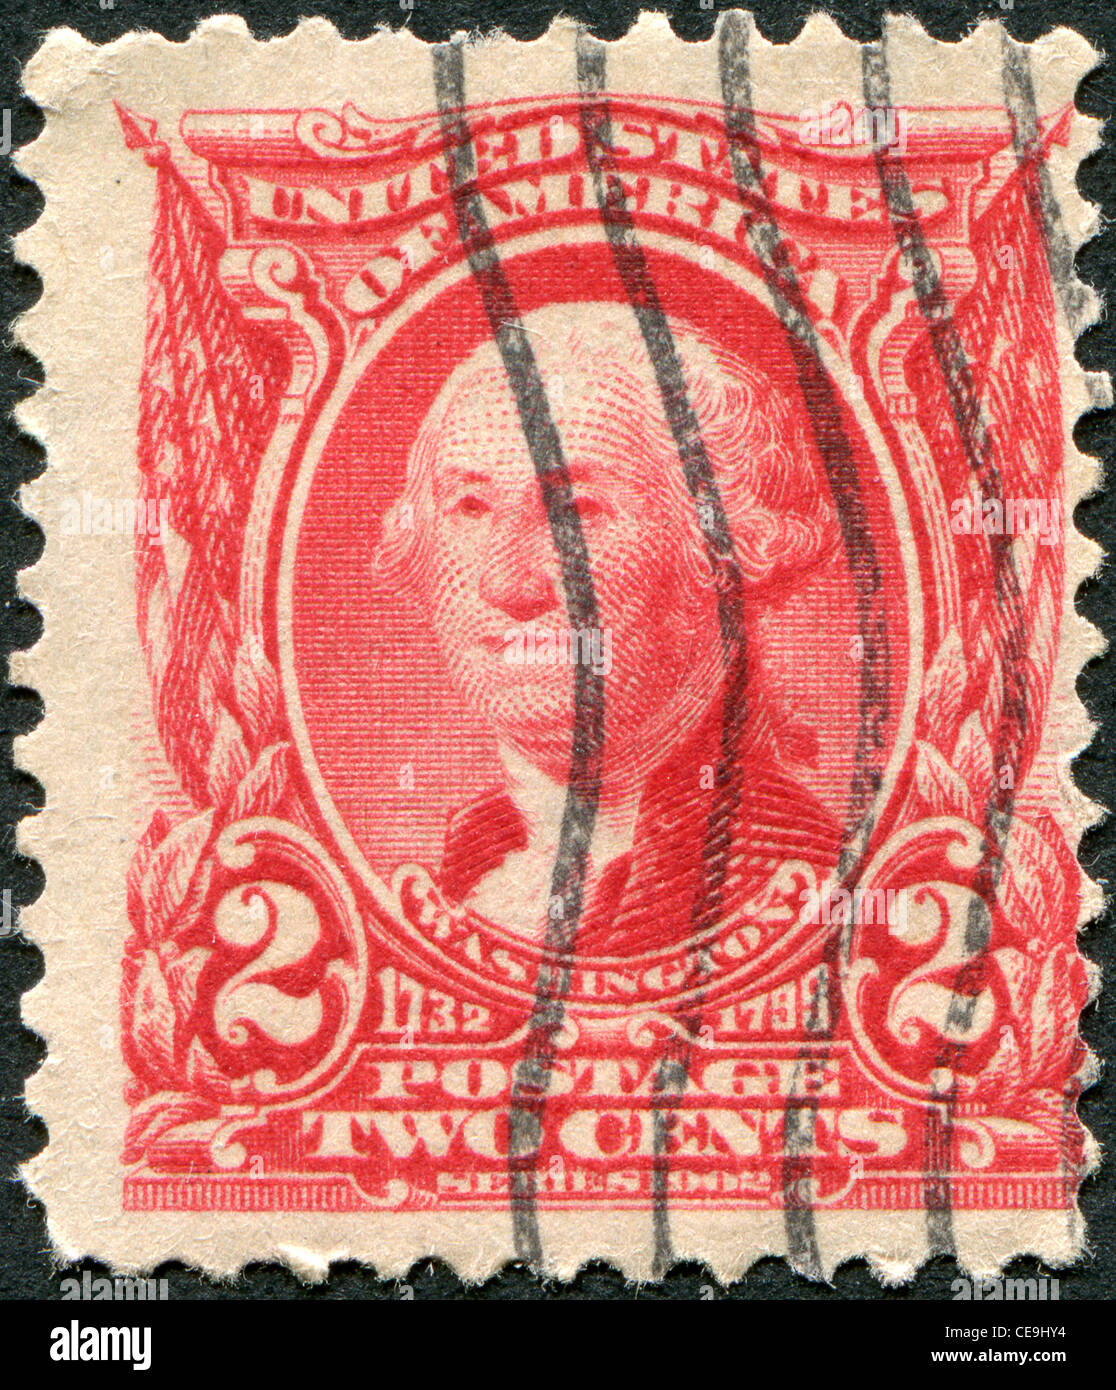 USA - CIRCA 1903: A stamp printed in the USA, shows the first U.S. president, George Washington, circa 1903 Stock Photo